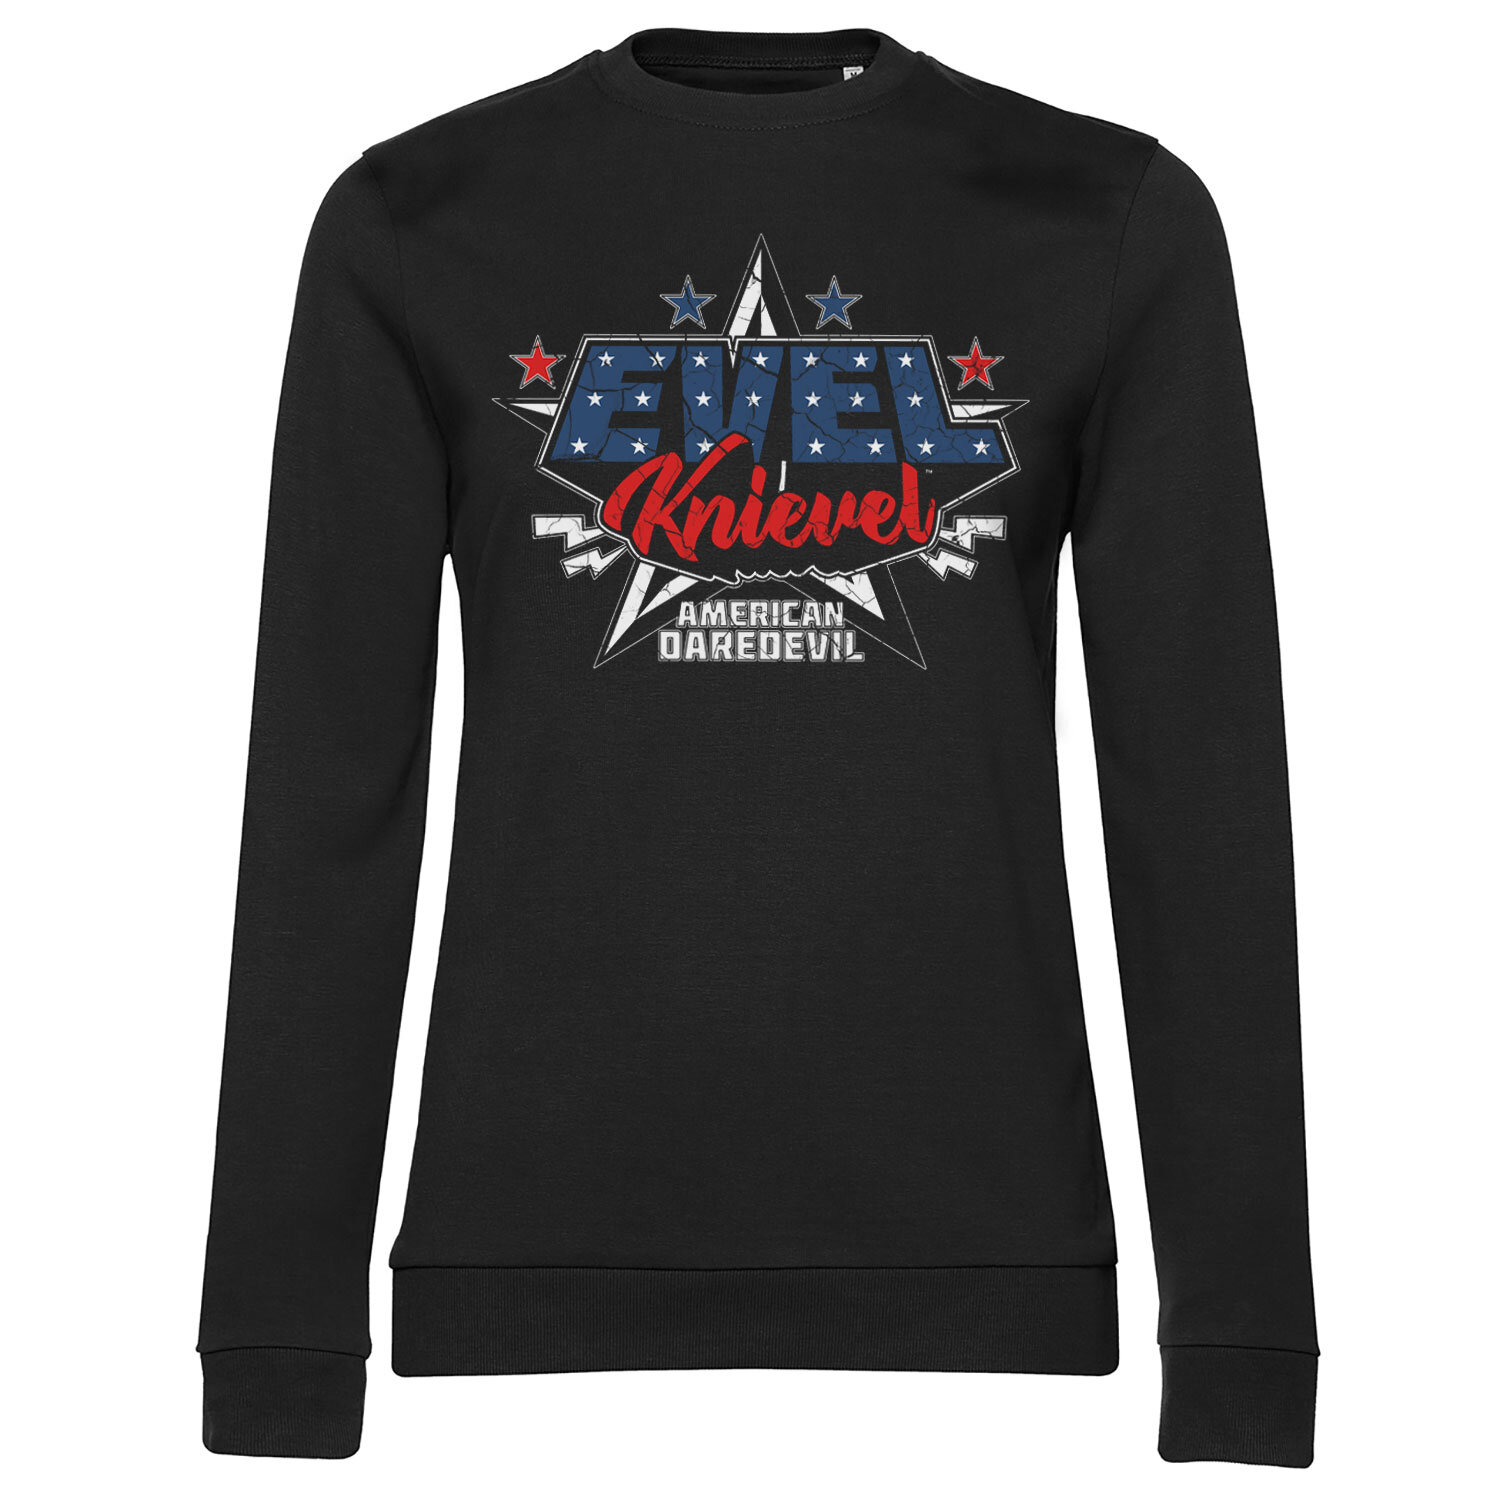 Evel Knievel - American Daredevil Girly Sweatshirt